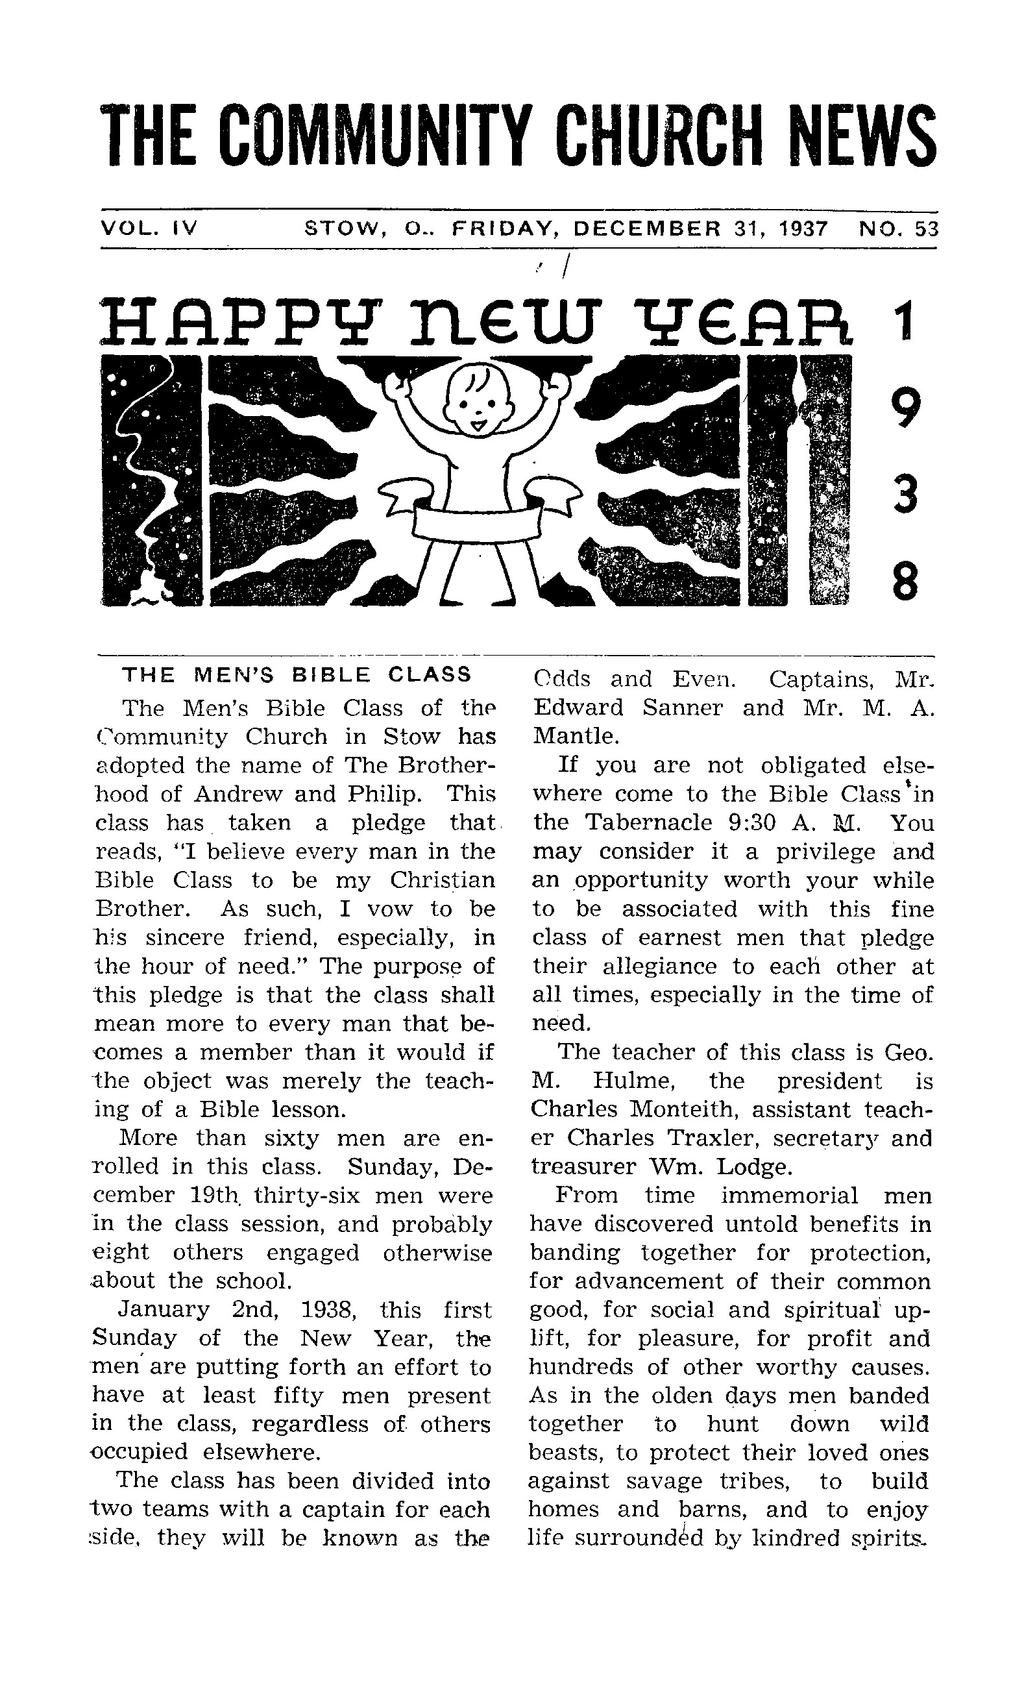 THE COMMUNITY CHURCH NEWS VOL. IV STOW, O.. FRIDAY, DECEMBER 31, 1937 NO.